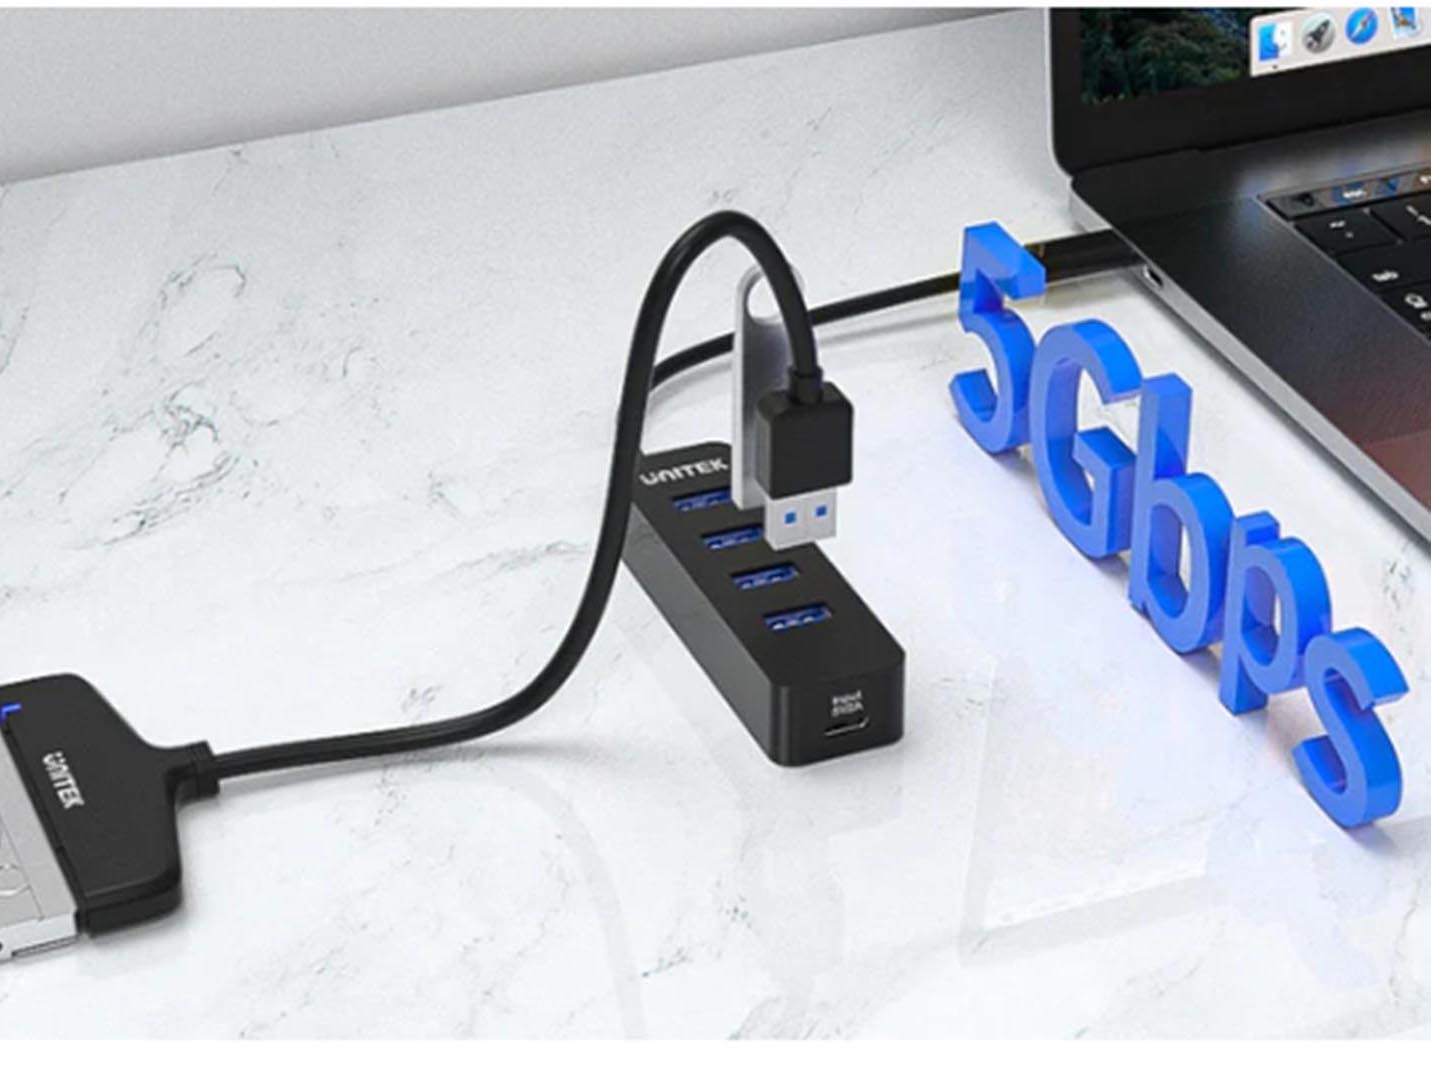 UNITEK USB-C Hub 4port + USB-C Power Charger